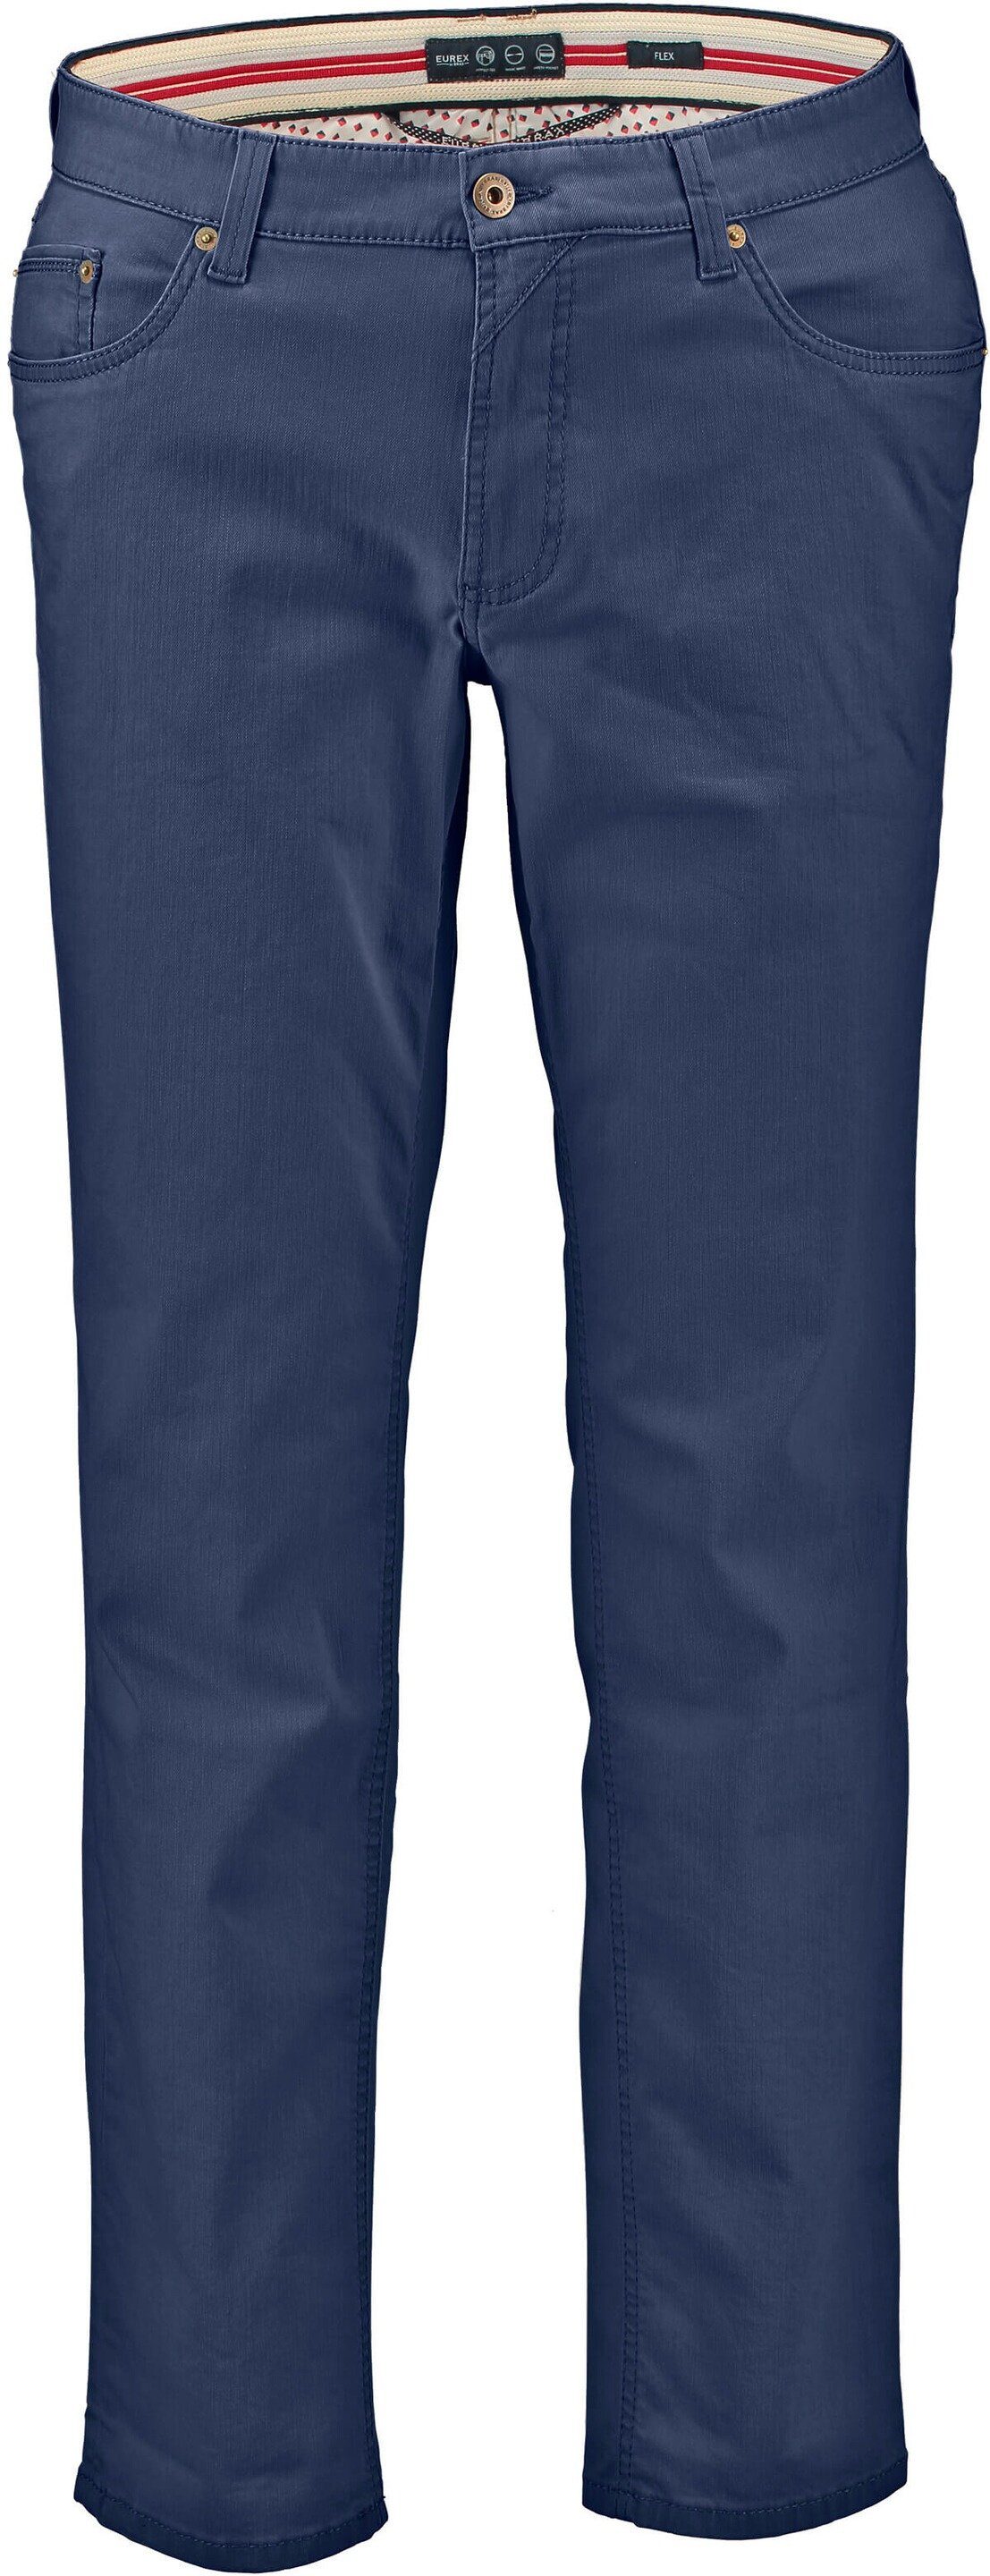 BY EUREX Coolmax 5-Pocket-Jeans Five-Pocket-Jeans Tiefbund BRAX EUREX by bluestone BRAX